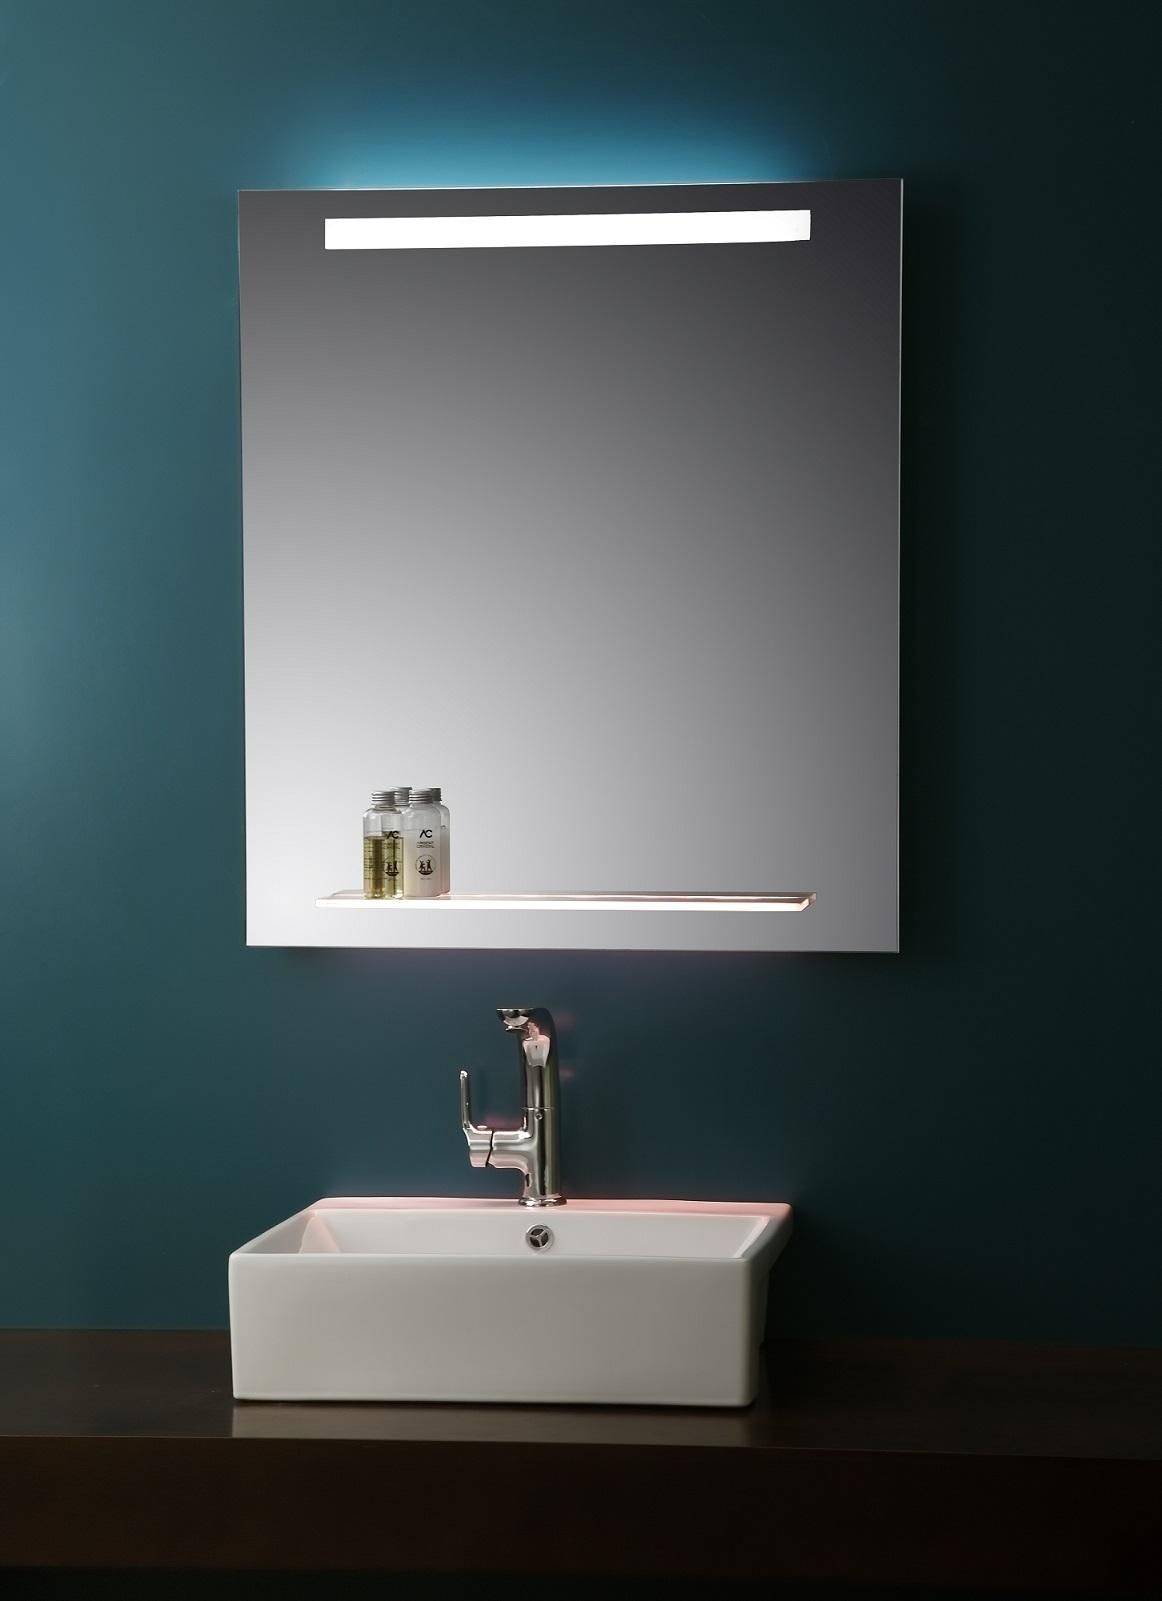 Bathroom Magnifying Vanity Mirrors | Bathroom Trends 2017 / 2018 Pertaining To Magnifying Vanity Mirrors For Bathroom (View 19 of 20)